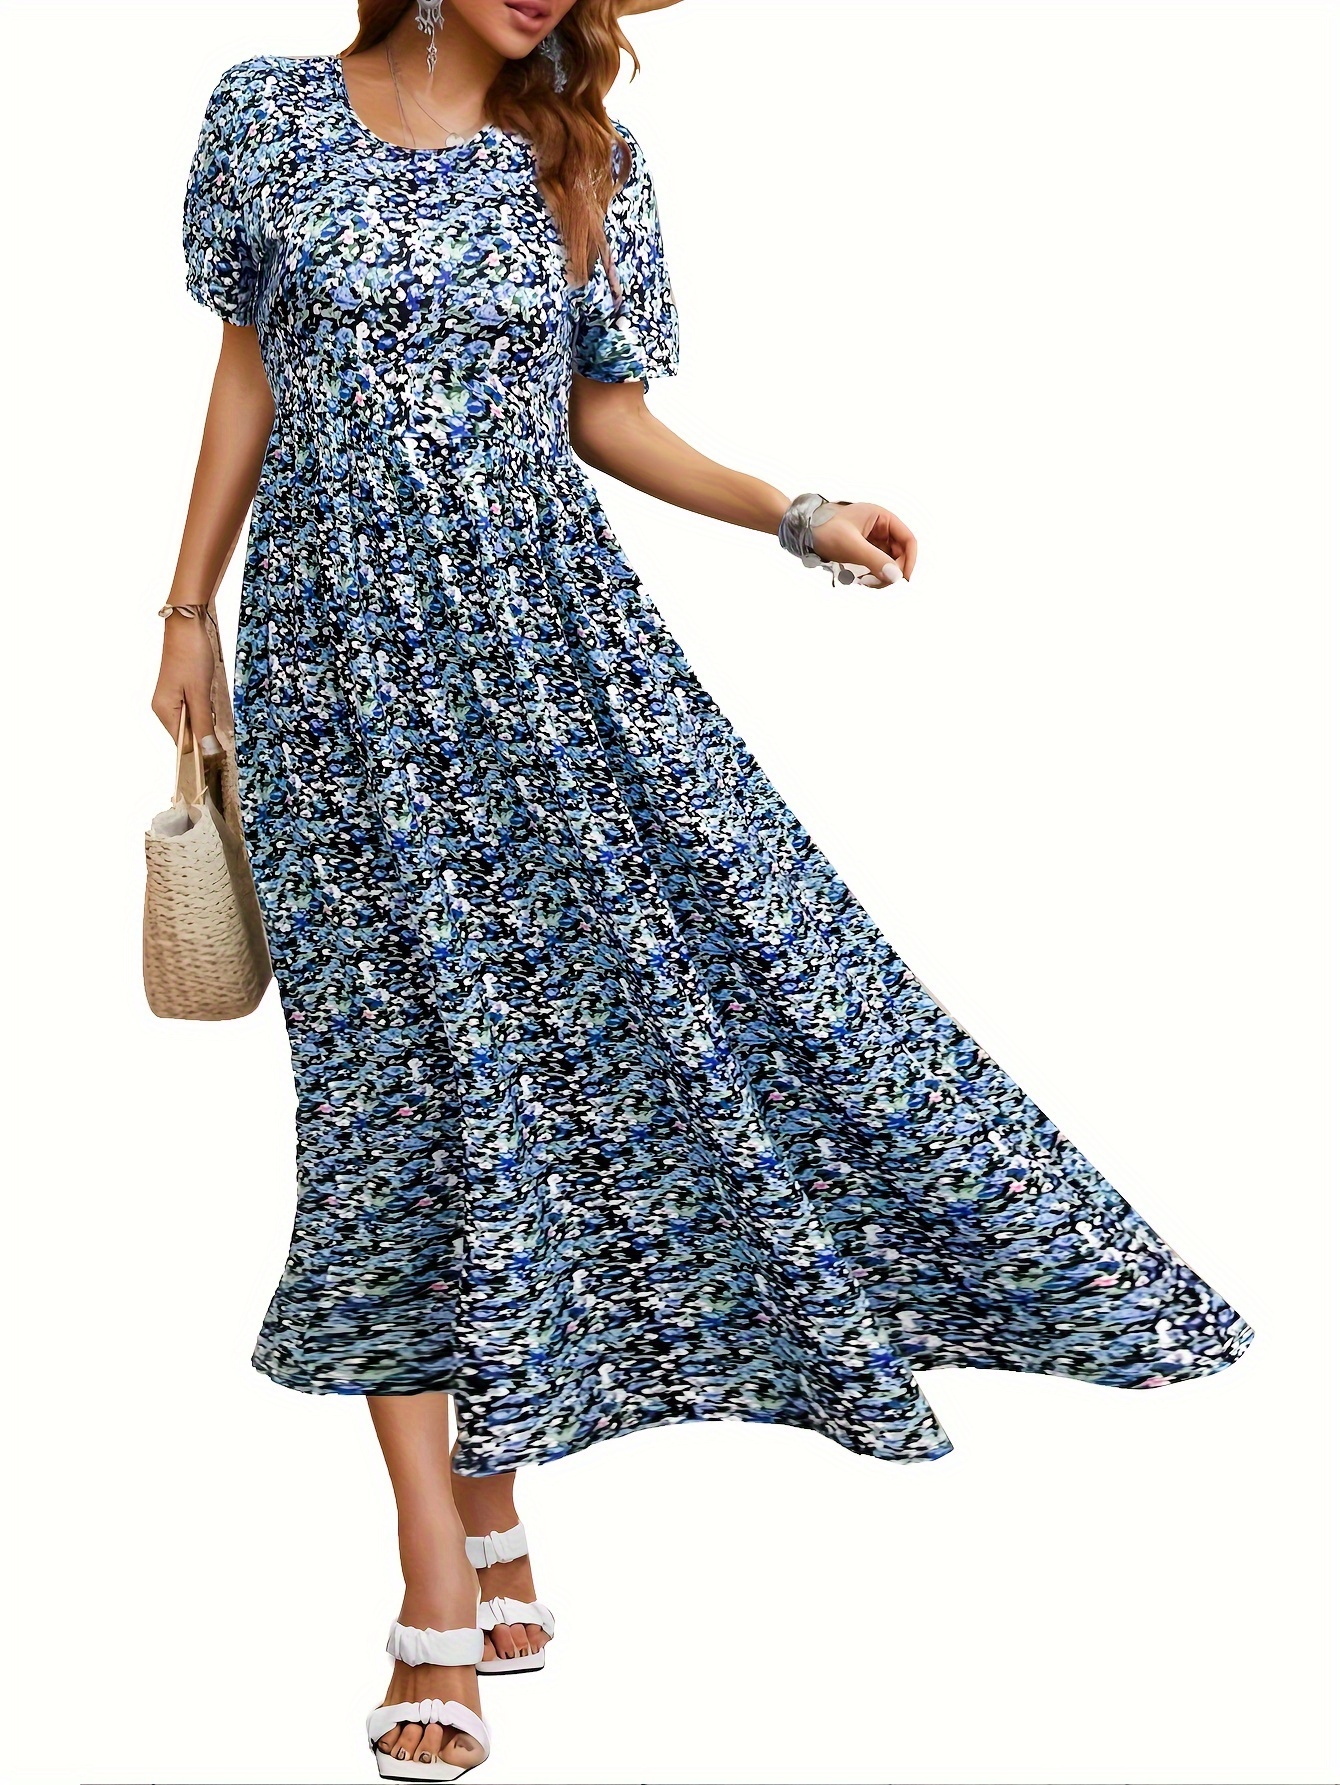 floral print crew neck dress elegant pocket short sleeve dress for spring summer womens clothing